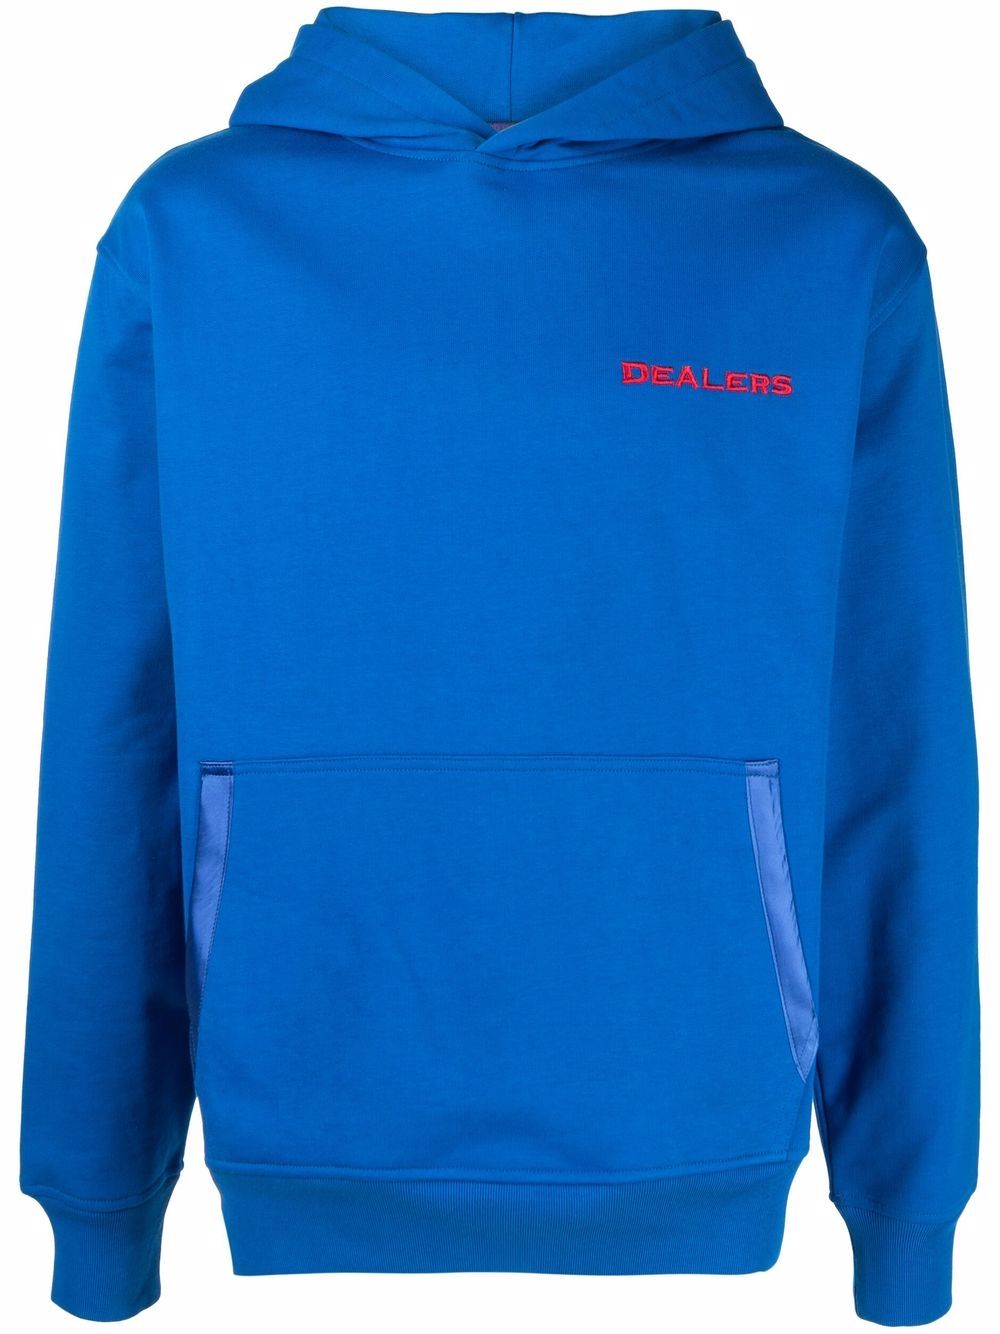 embroidered-Dealers hoodie